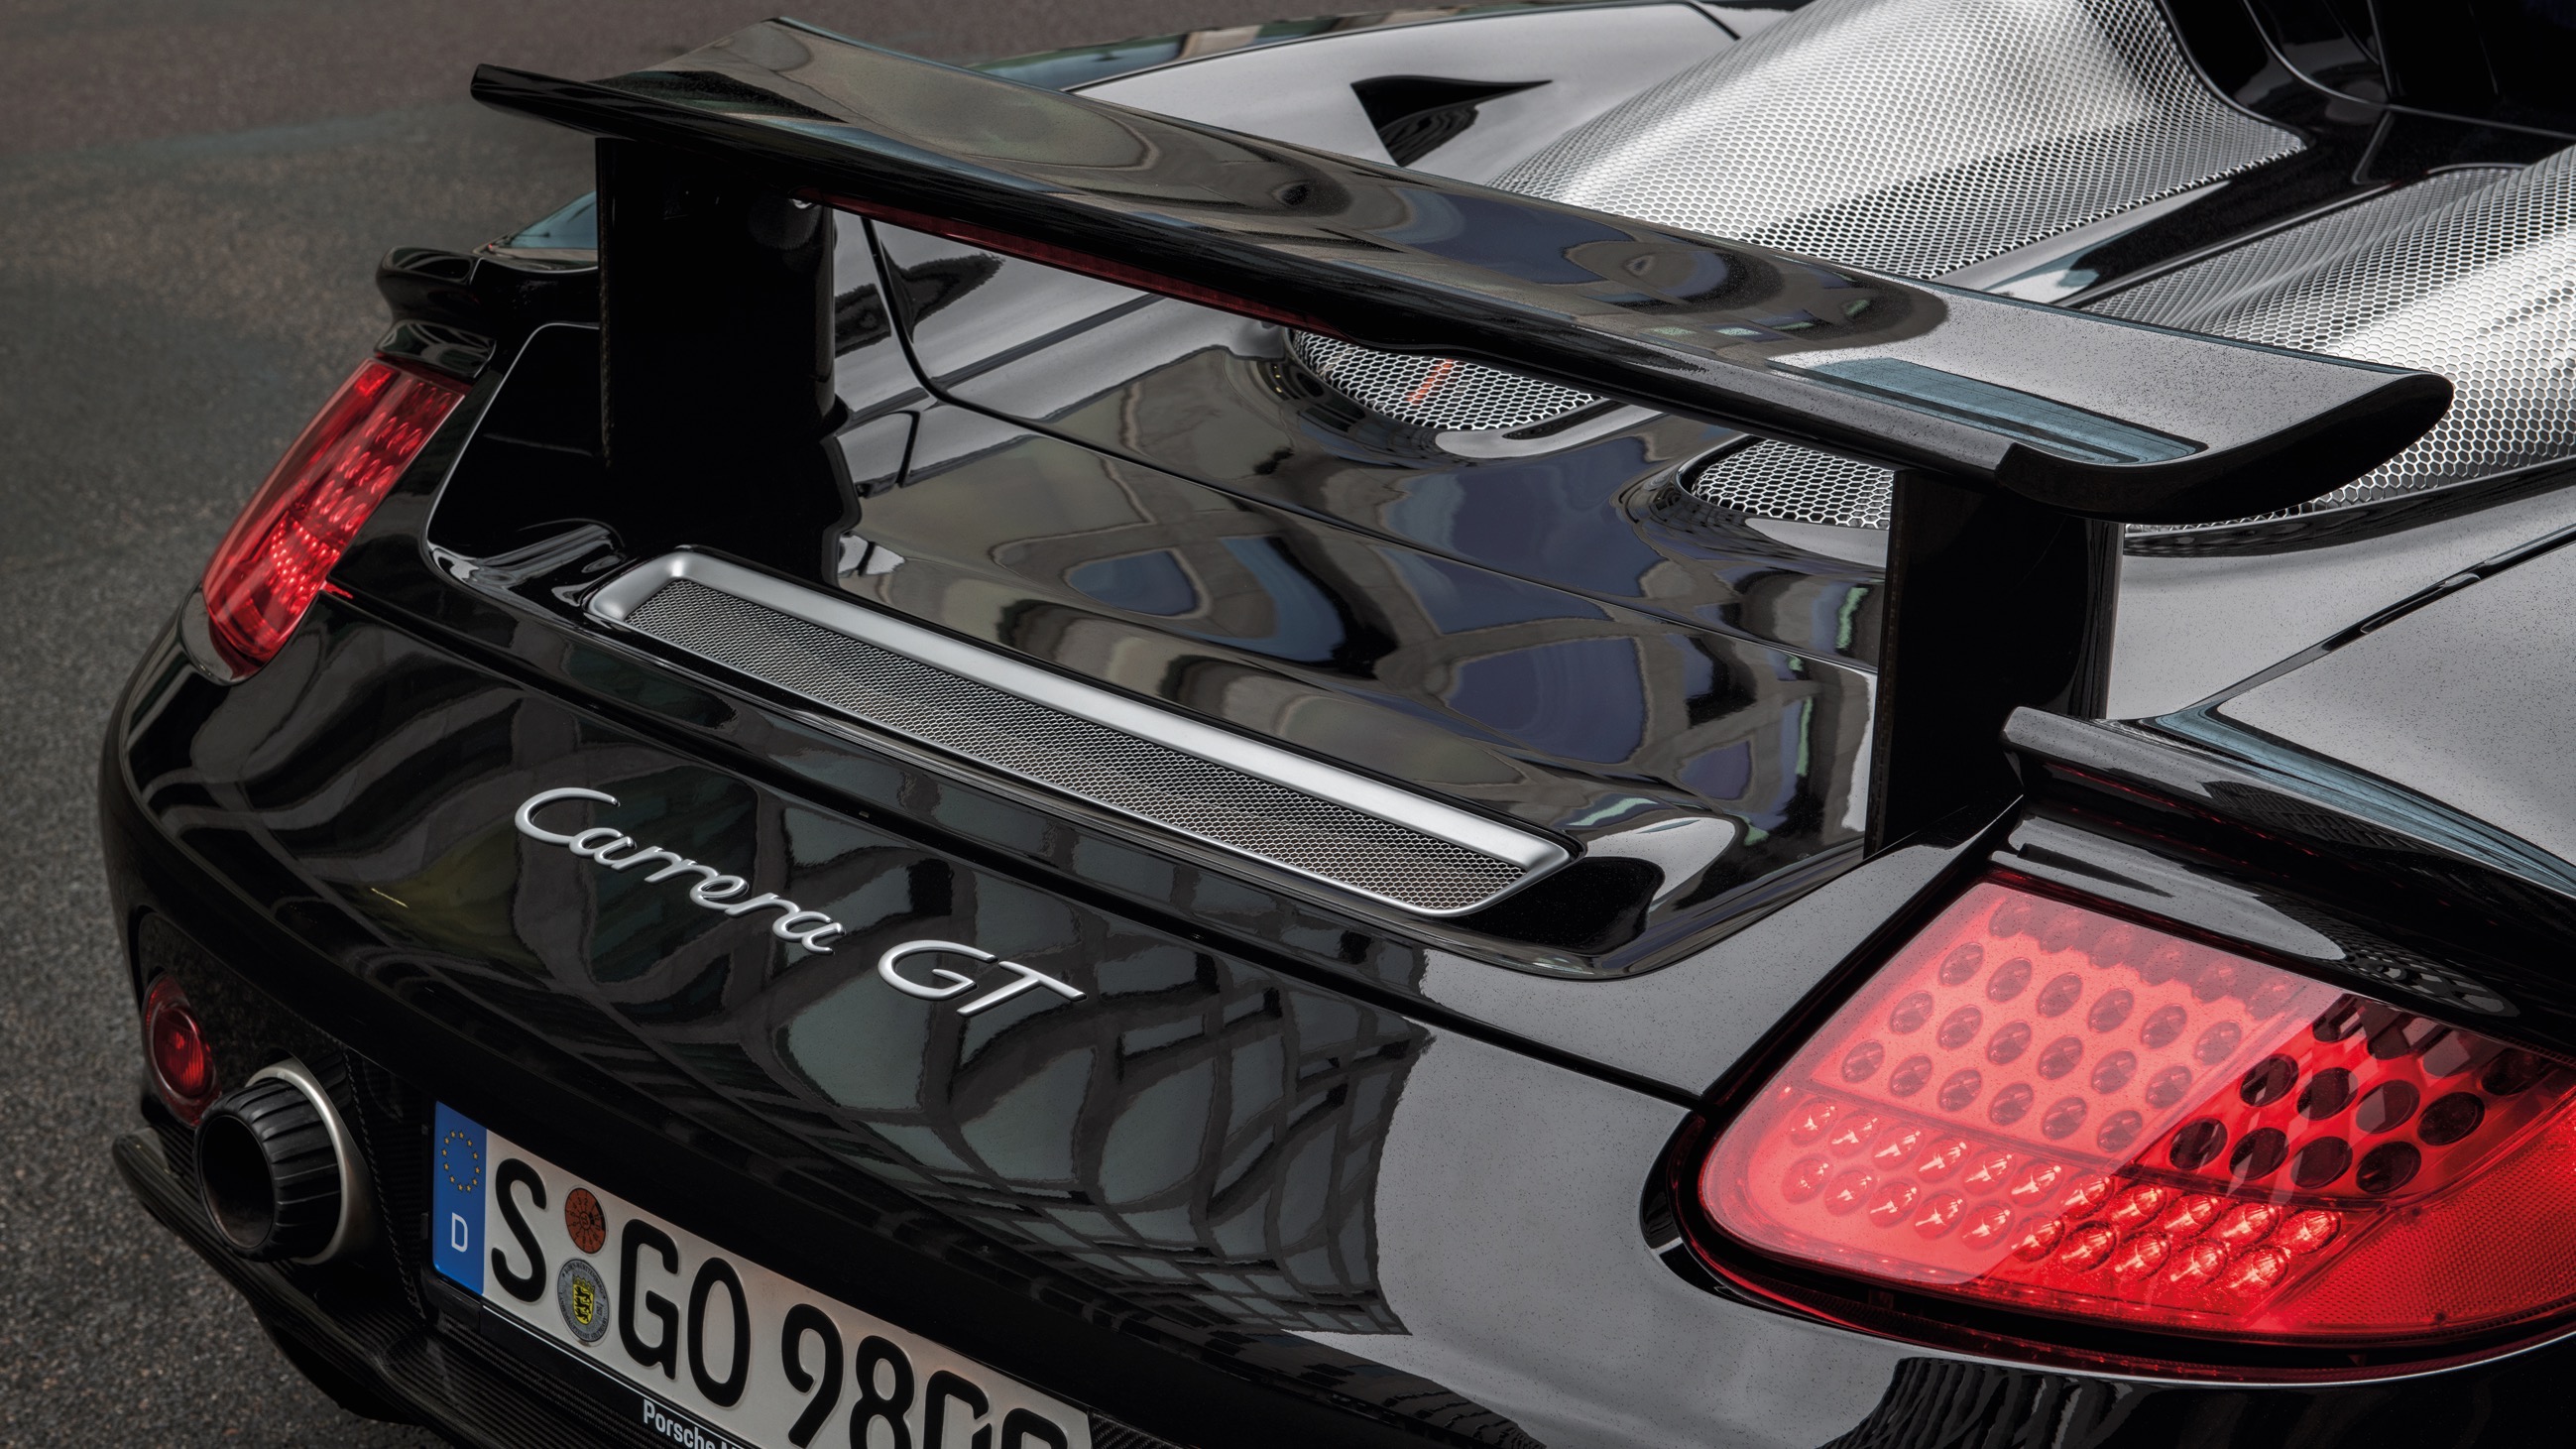 CarreraGT_Porsche SemanalClásico - Revista online de coches clásicos, de colección y sport - supercar